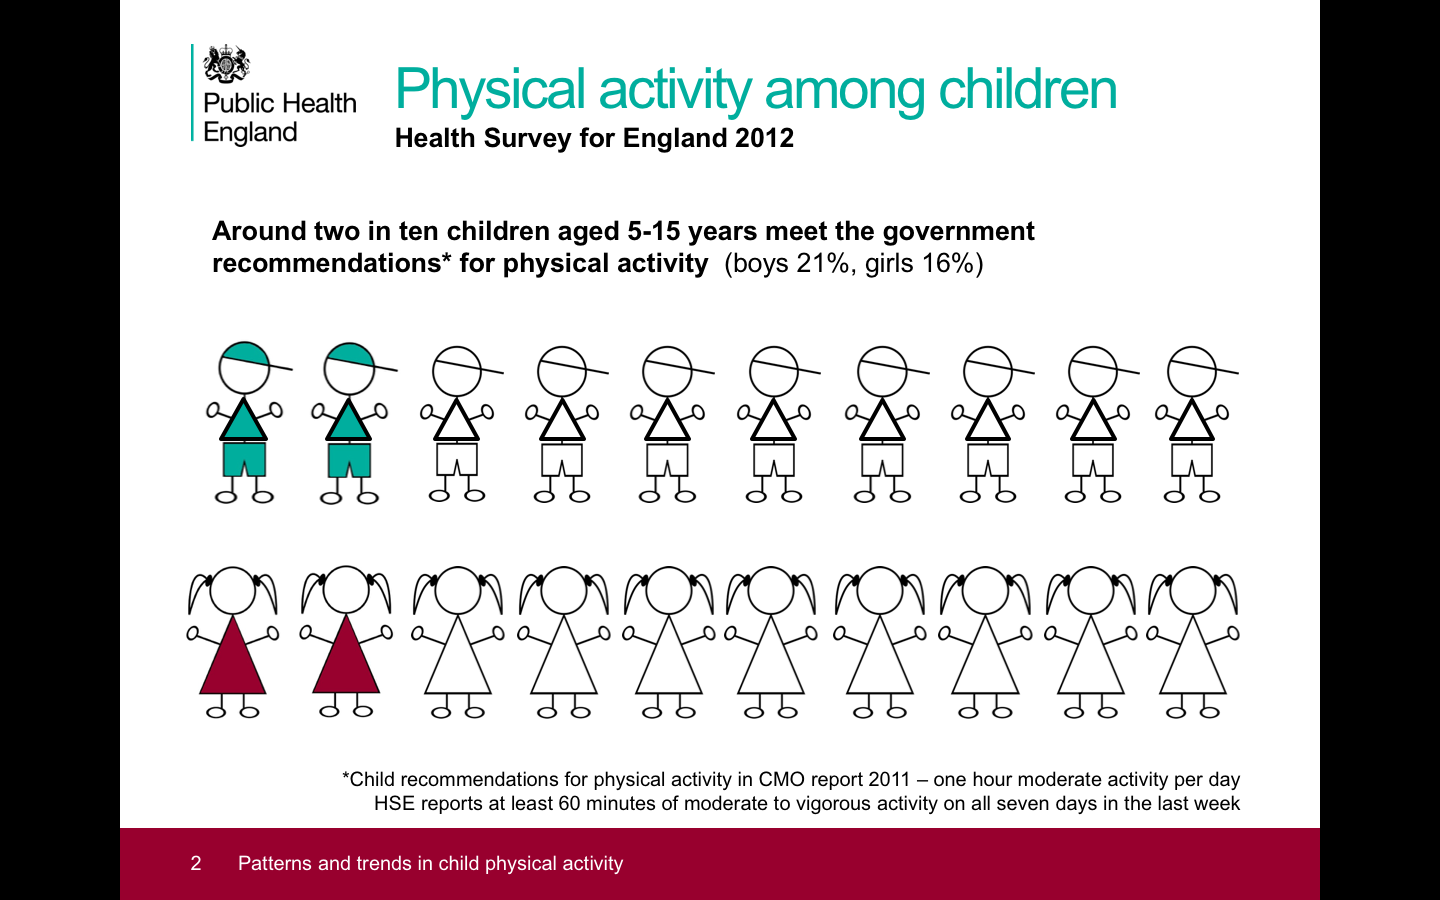 Public Health England child activity levels